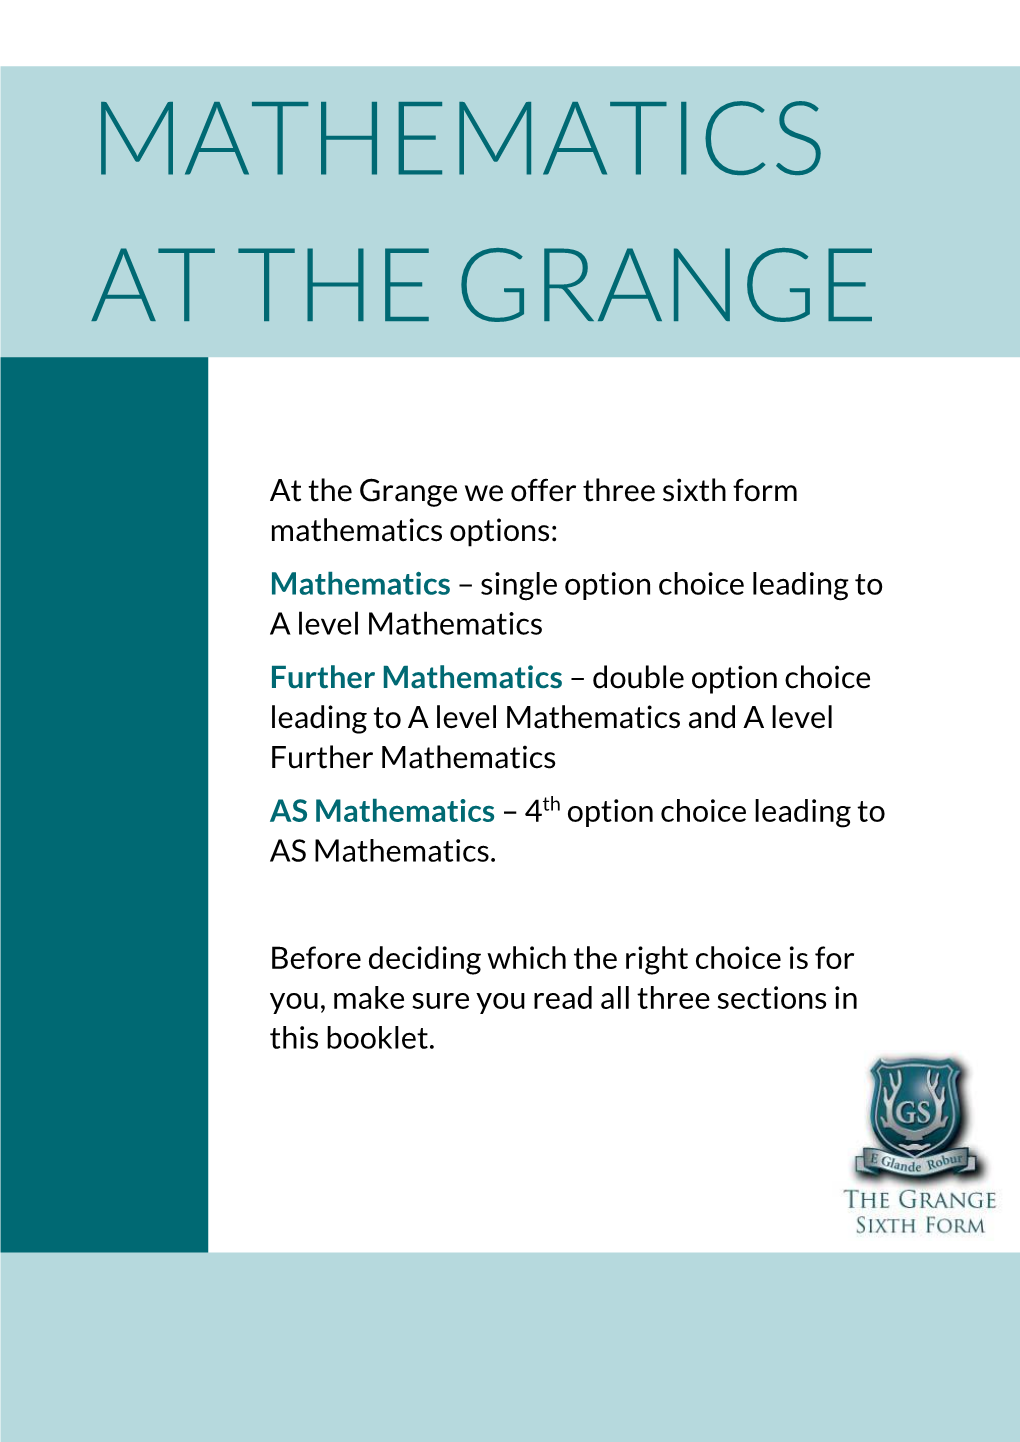 Mathematics at the Grange